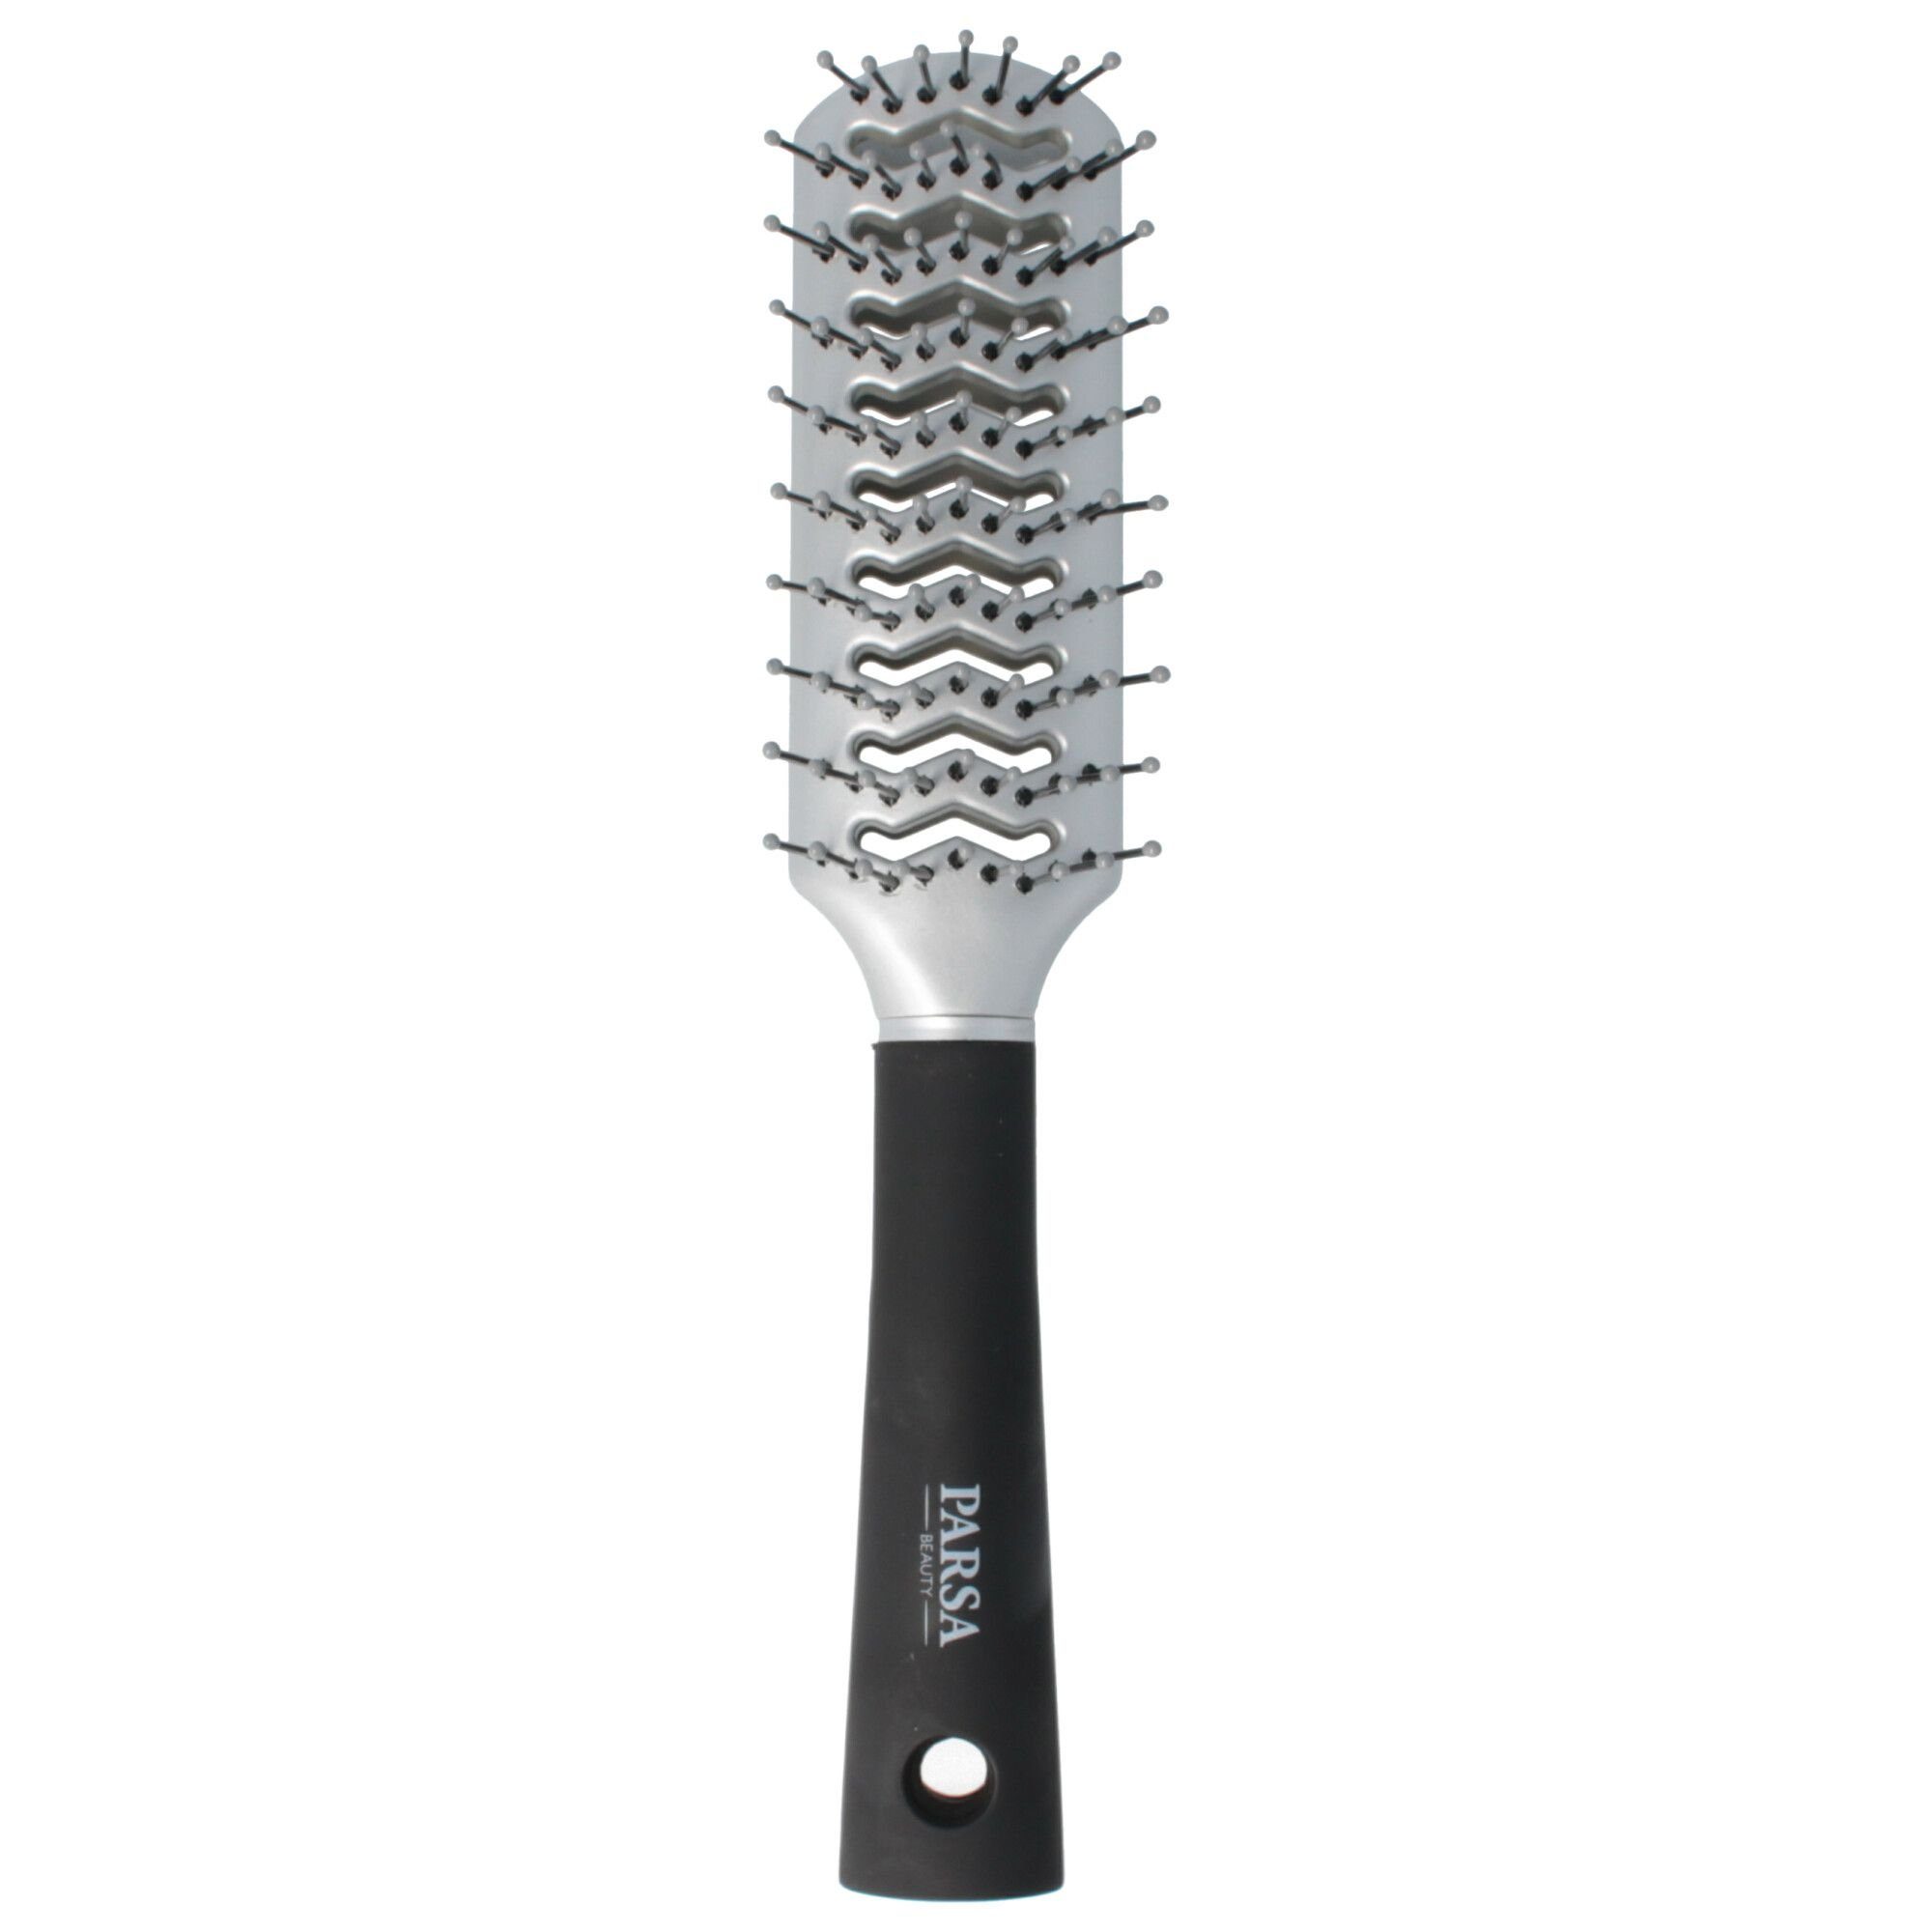 PARSA Beauty Haarbürste Haarbürste Trend Line Föhnbürste mit Kunststoffpins silber